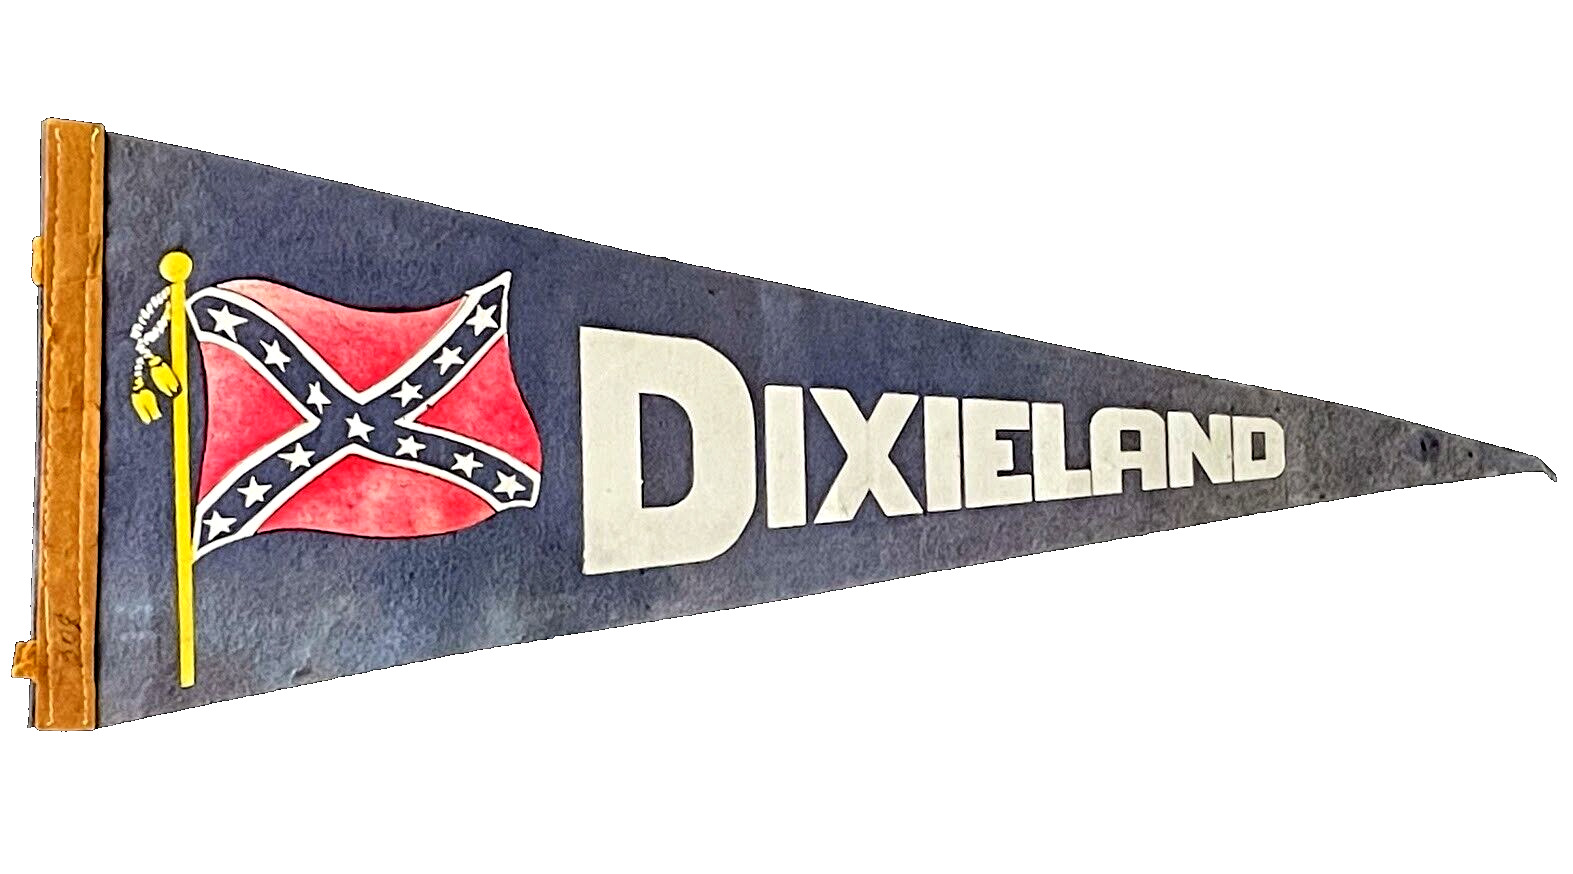 1950's Vintage Souvenir Felt Pennant Alabama Dixieland Gift Shop Collectible